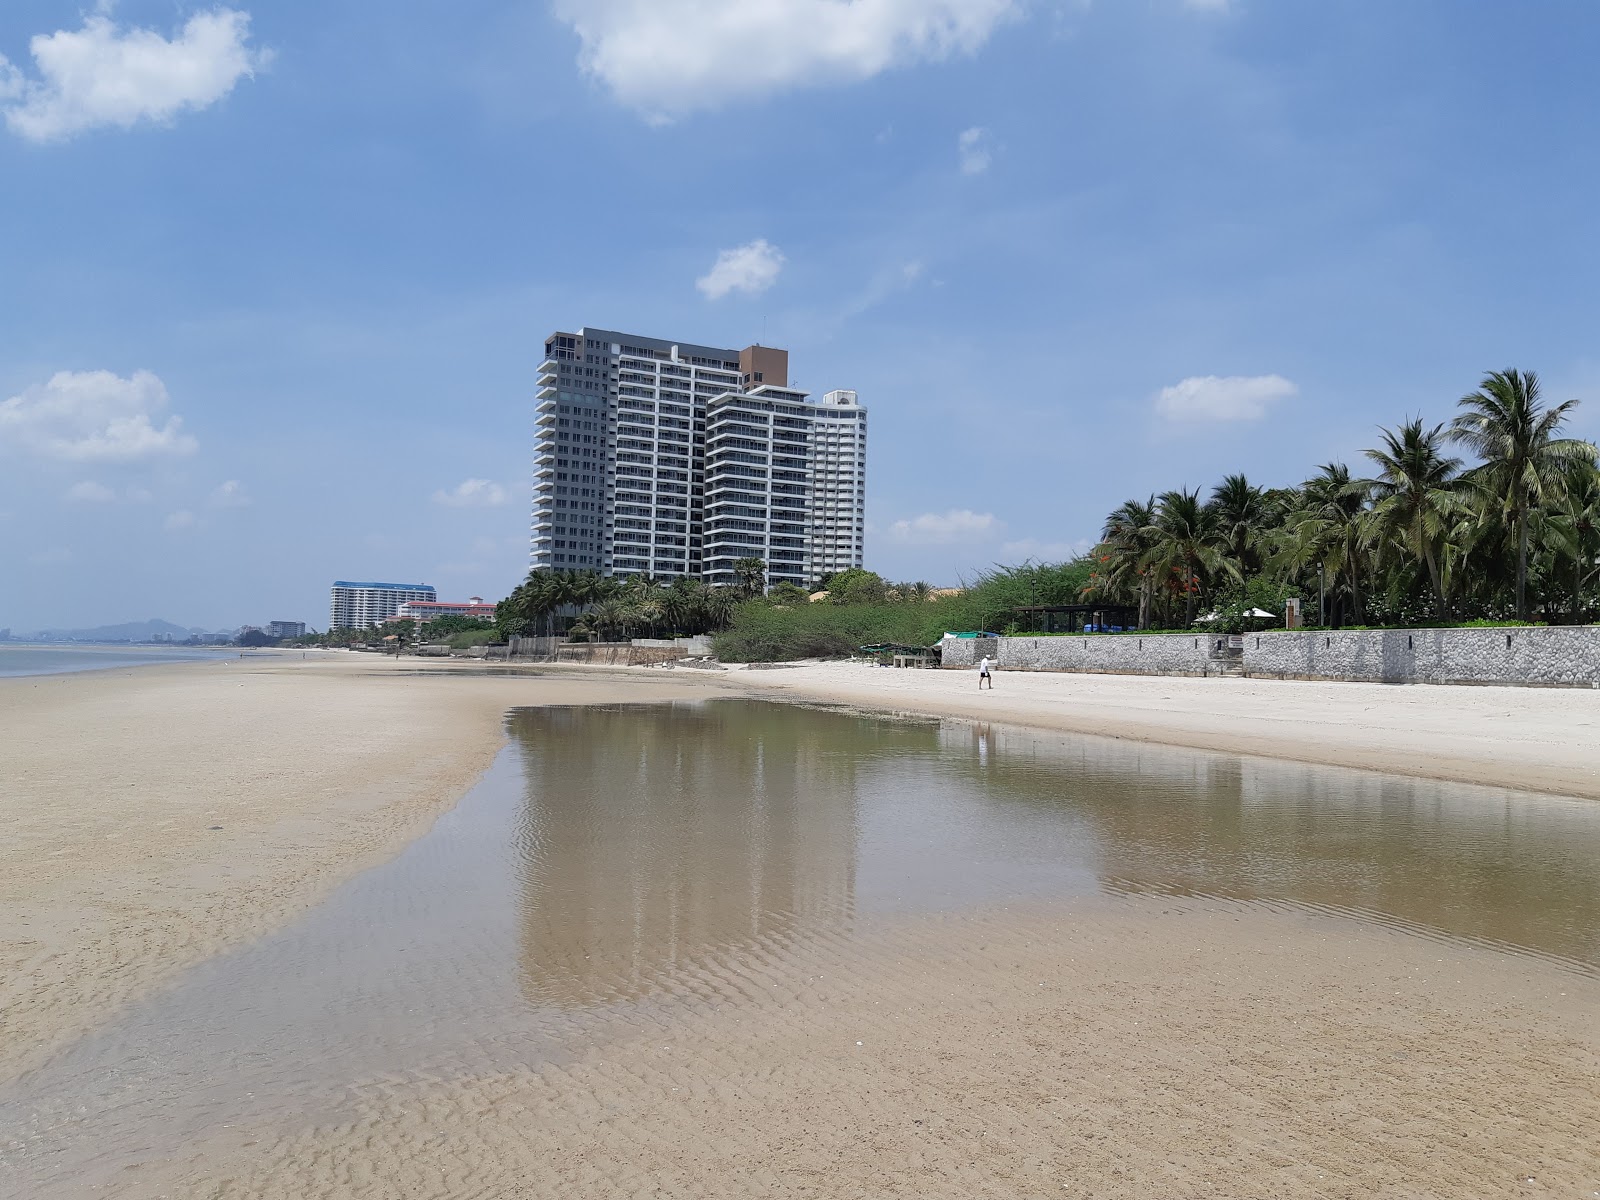 Foto af Q Seaside Huahin Beach delvist hotelområde